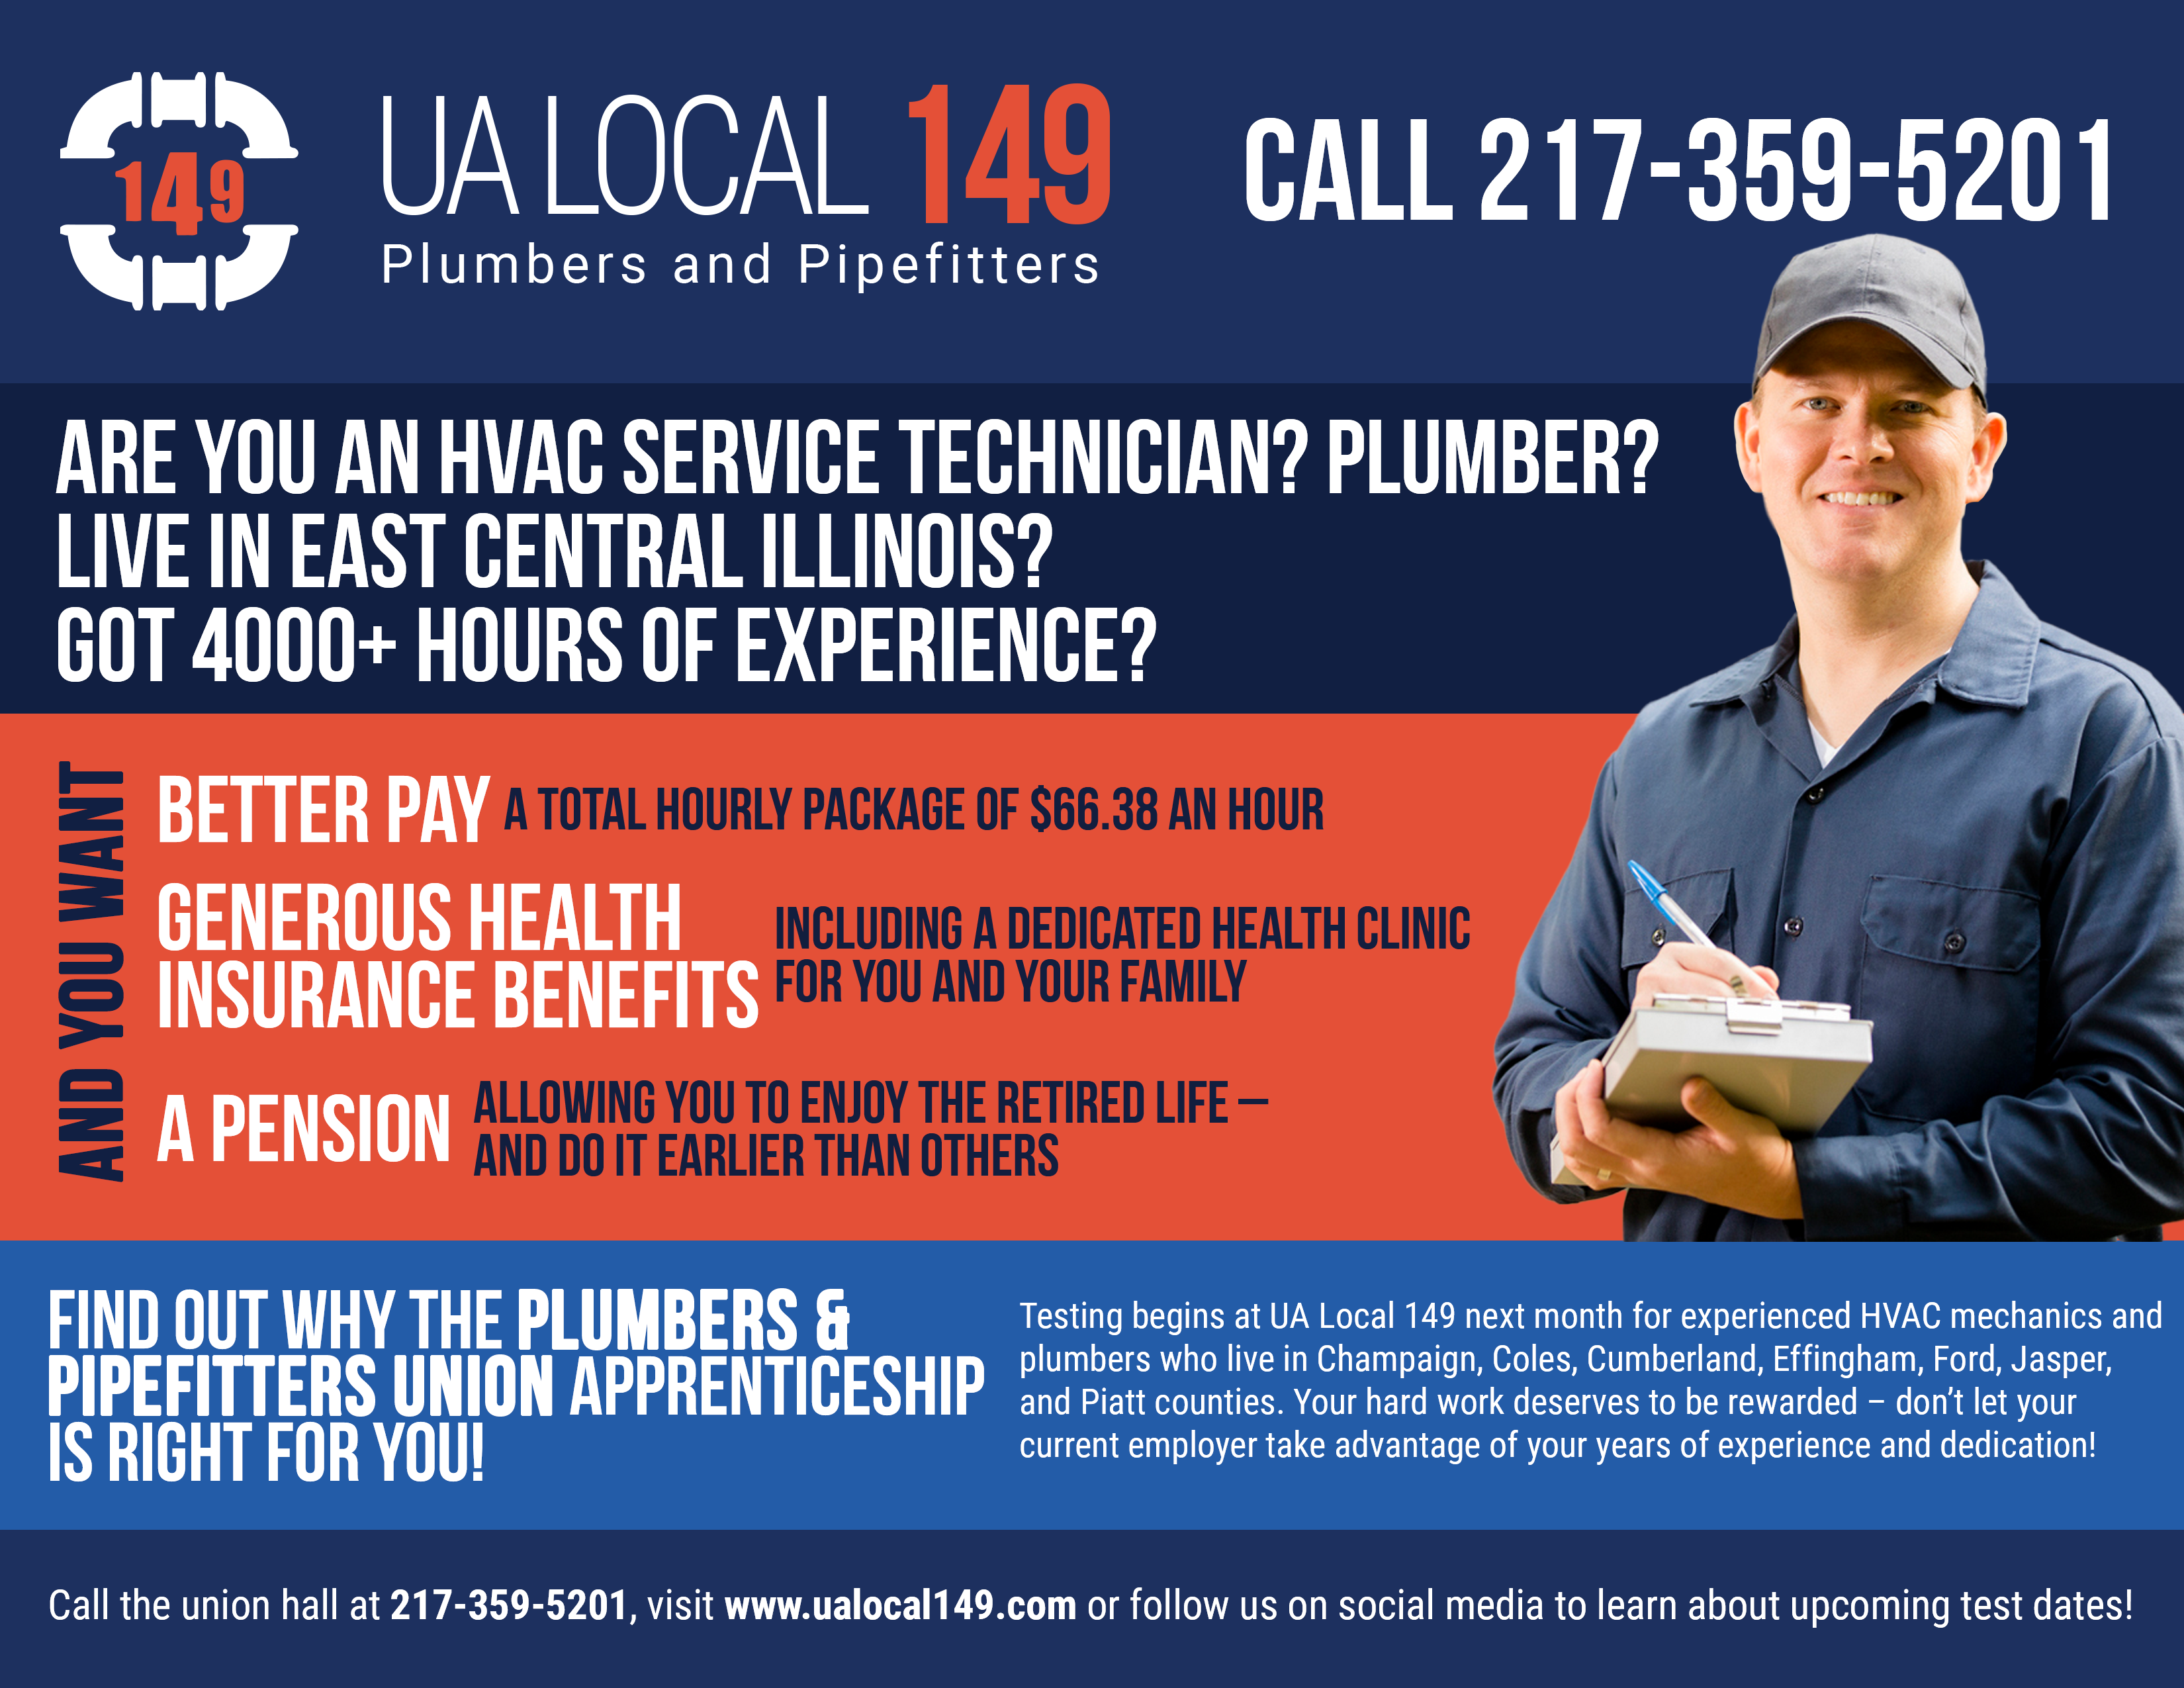 plumber-pipefitter-apprenticeship-clean-plumbers-pipefitters-local-149